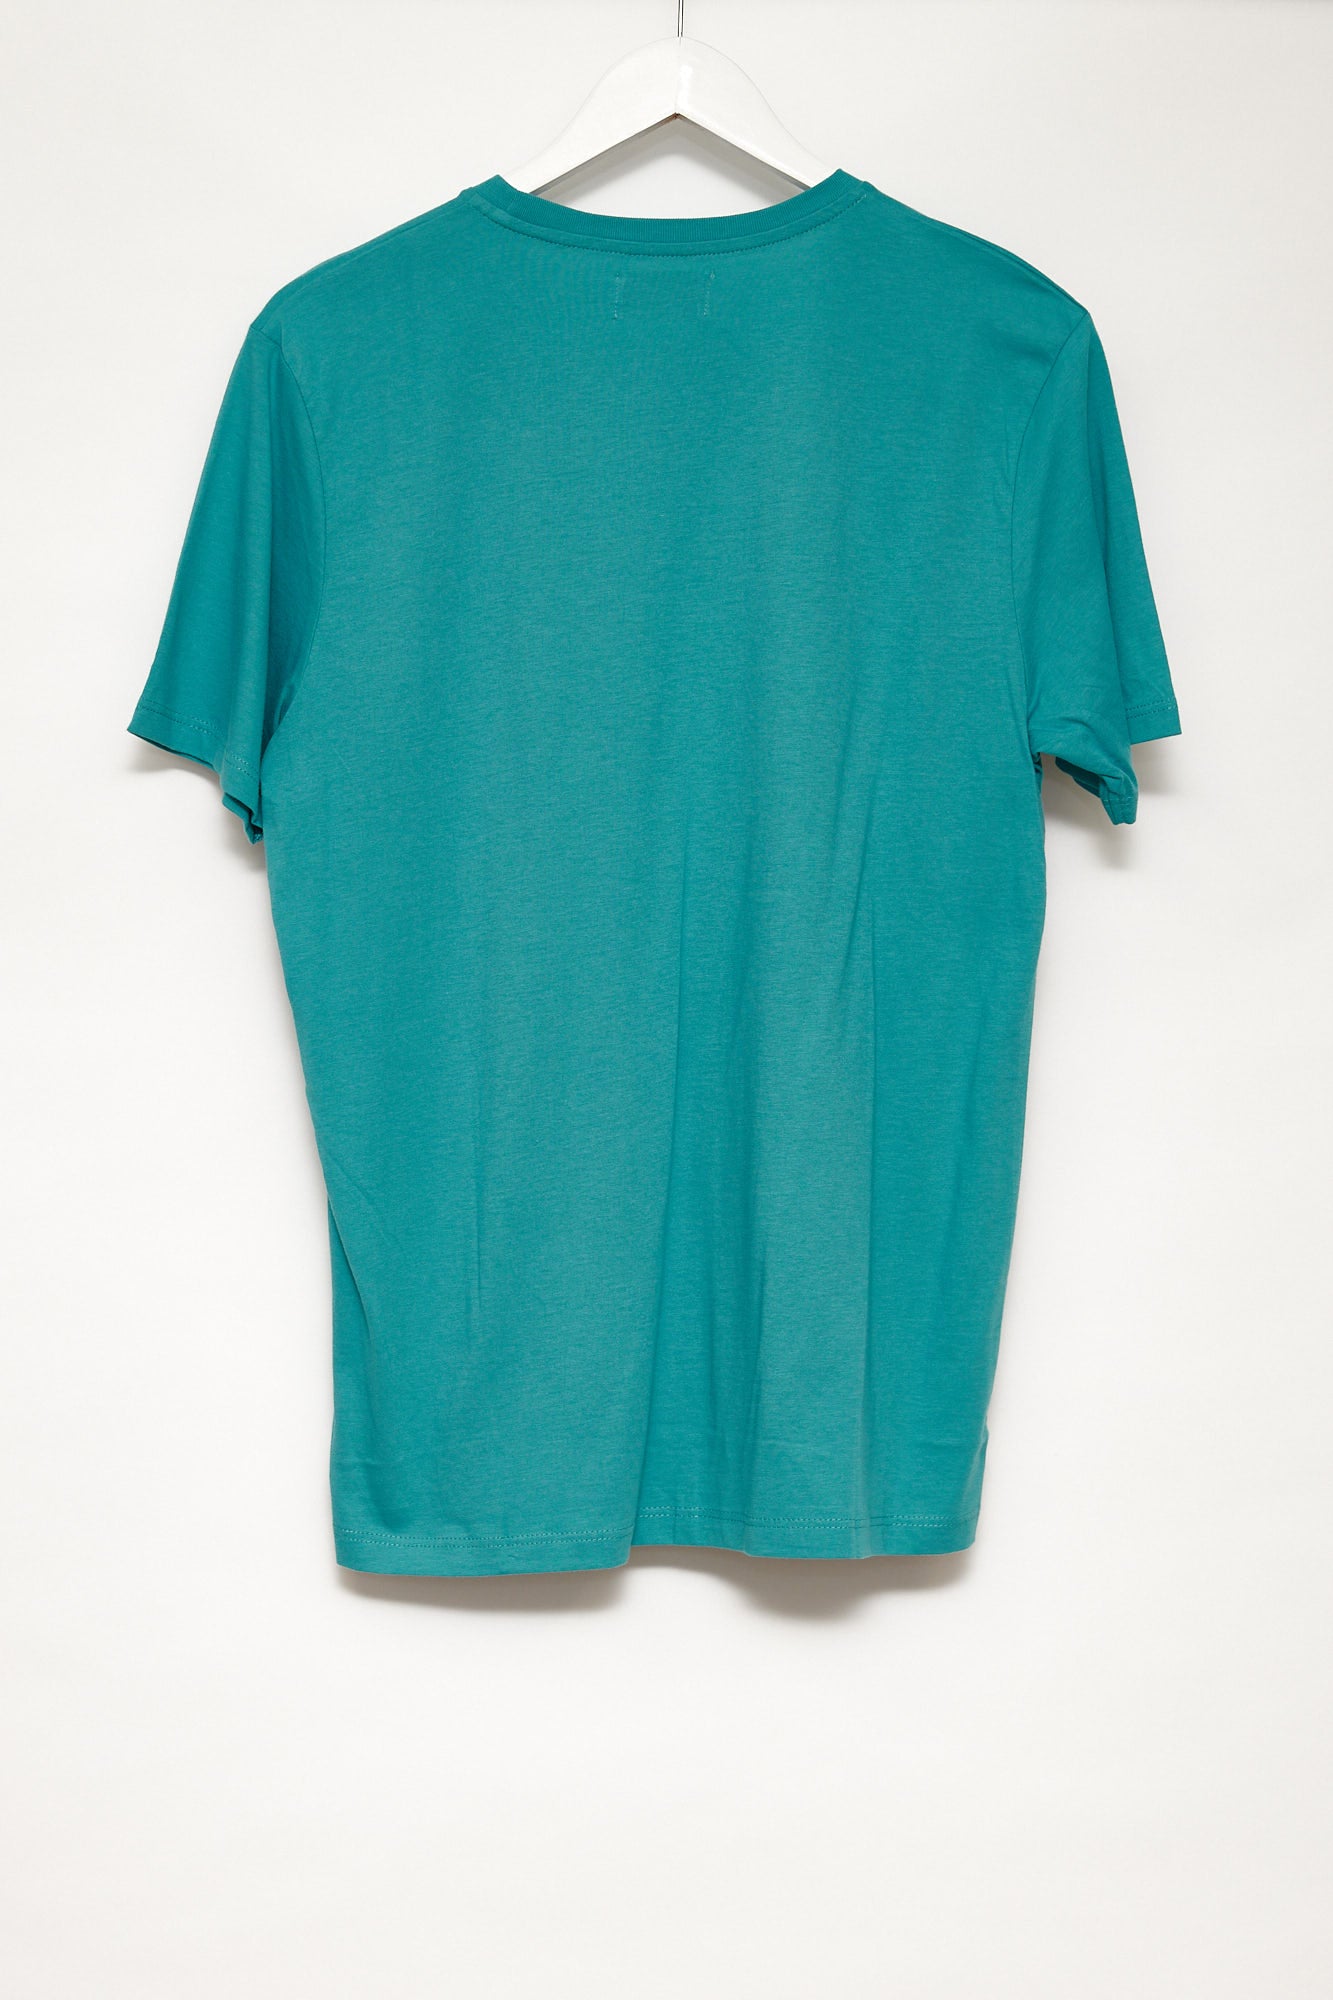 Mens Topman Green T-shirt : Size Small